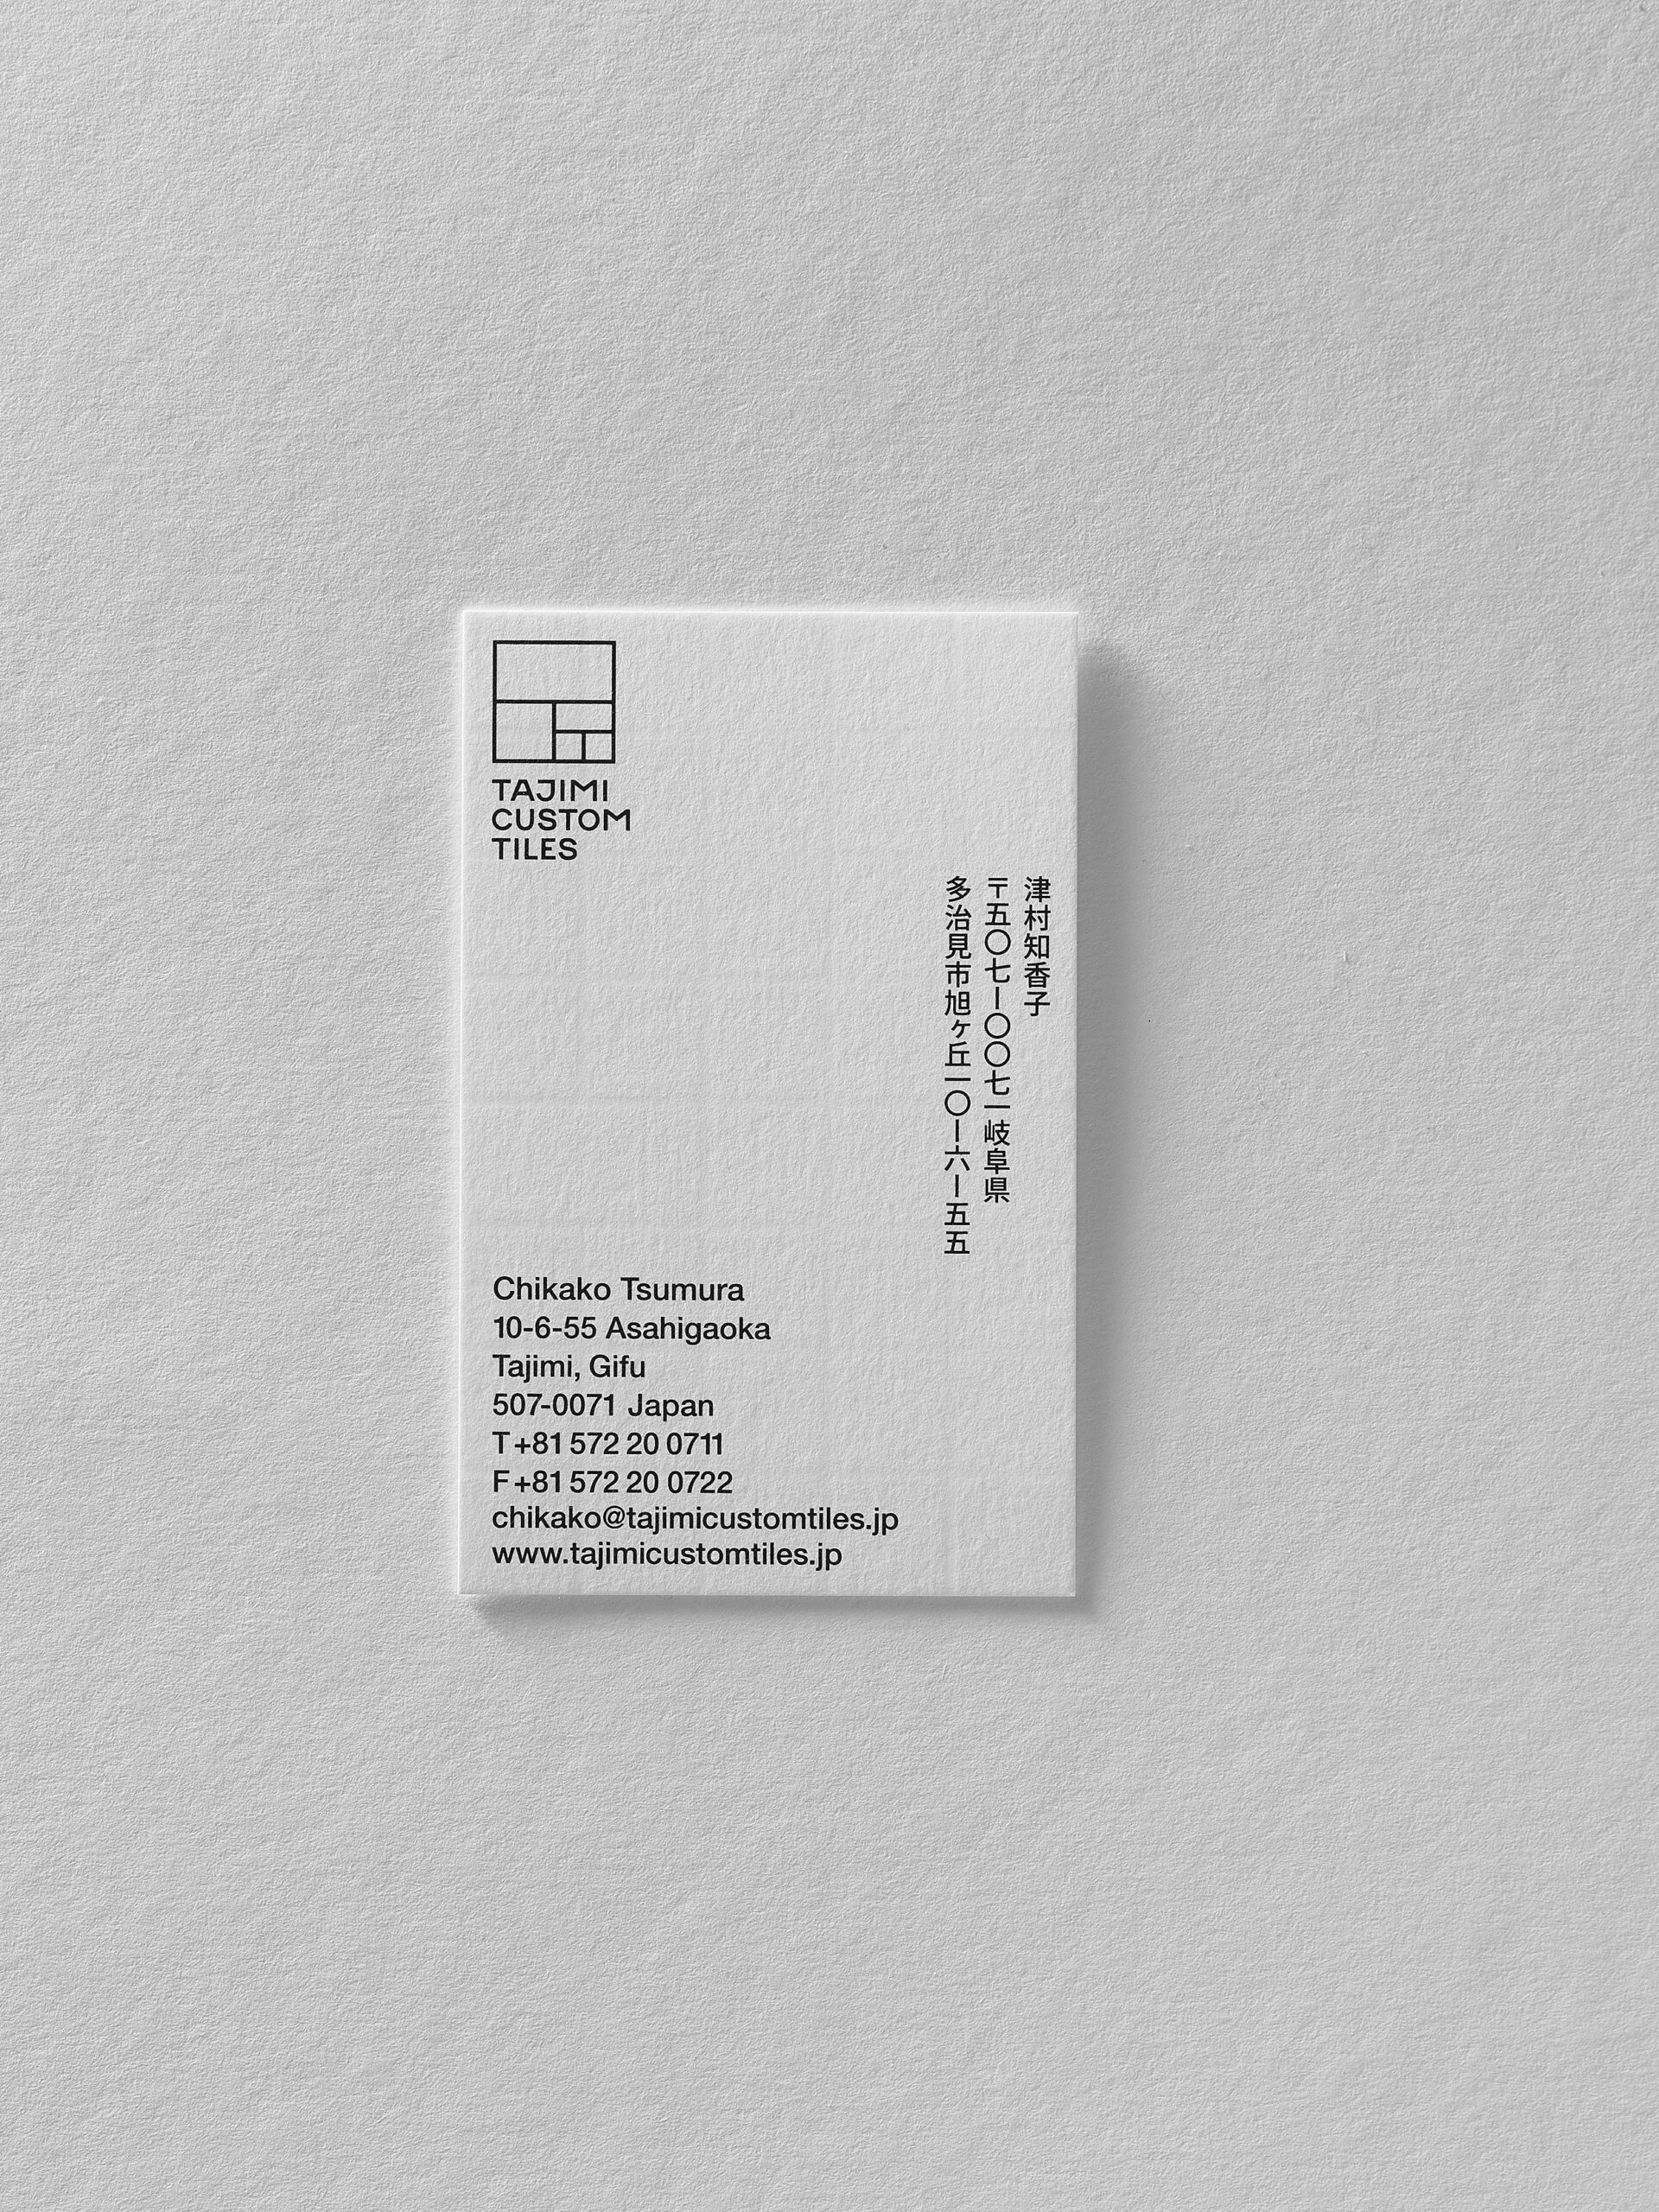 Tajimi Custom Tiles business card back